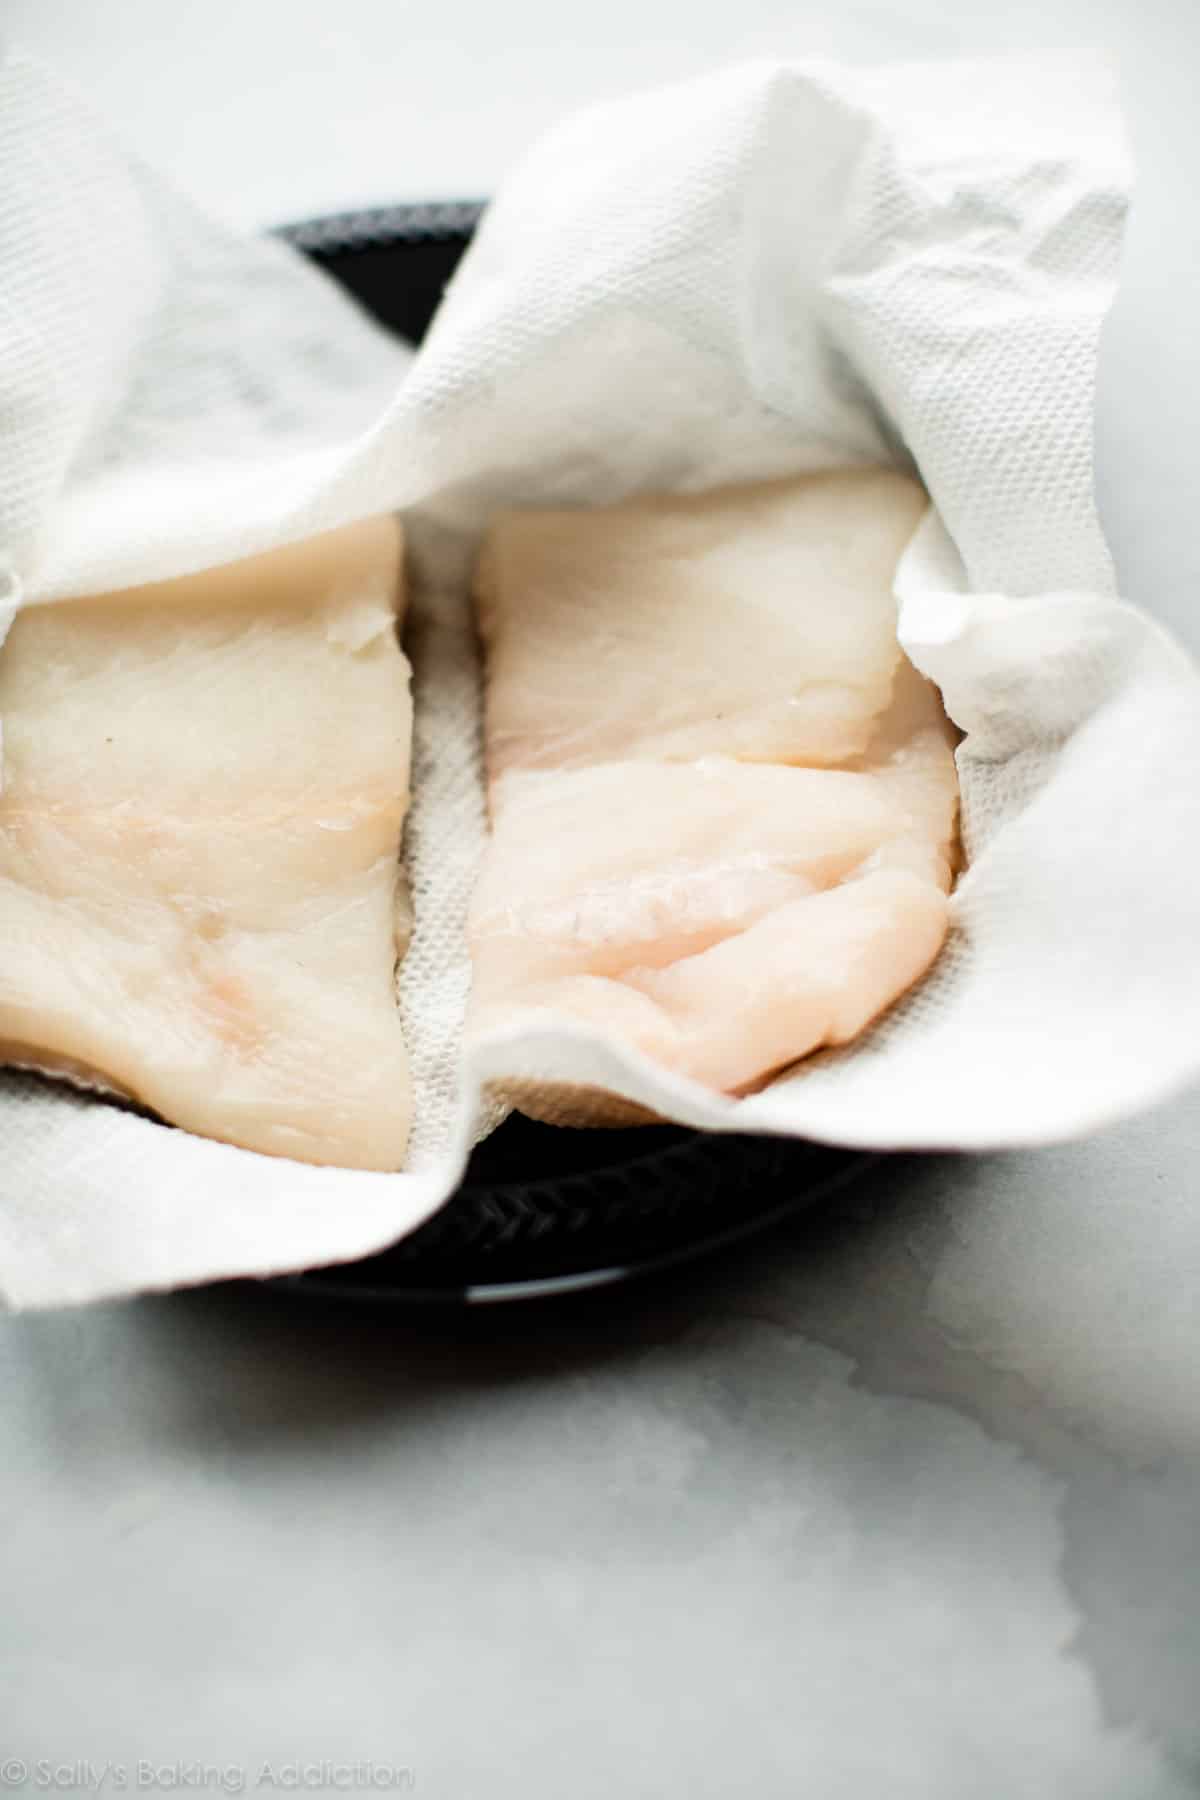 blotting halibut with paper towel